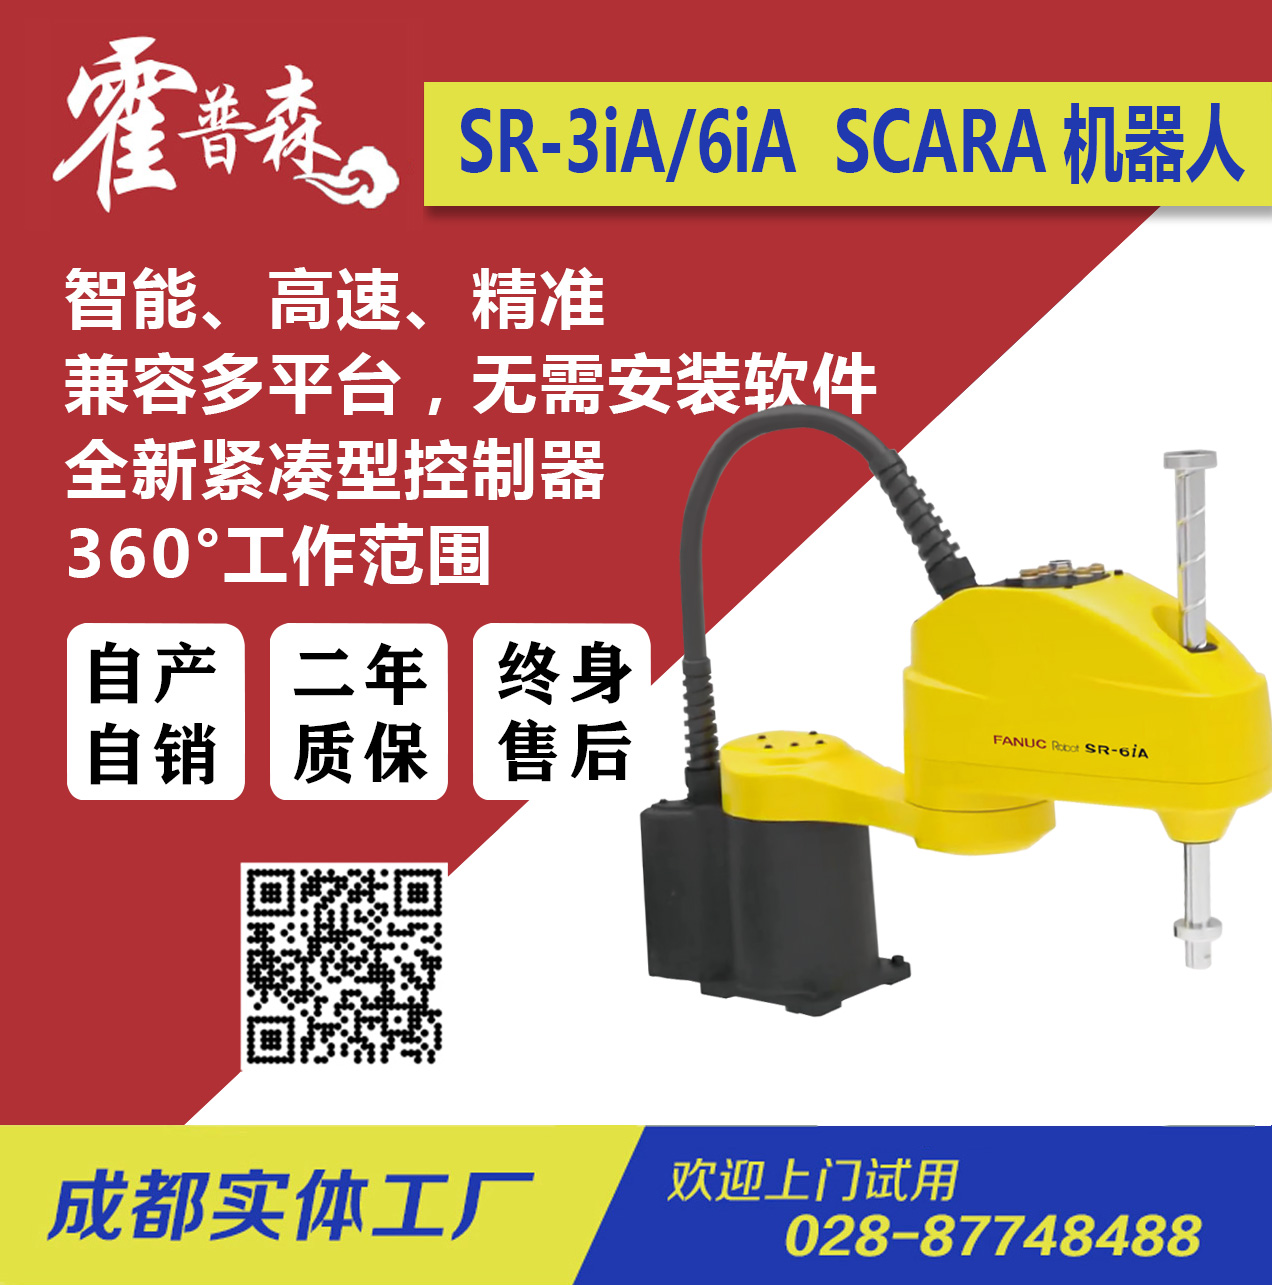 FANUC-Robot SR-3iA /多平台兼容/高速搬运/整列组装SCARA 机器人